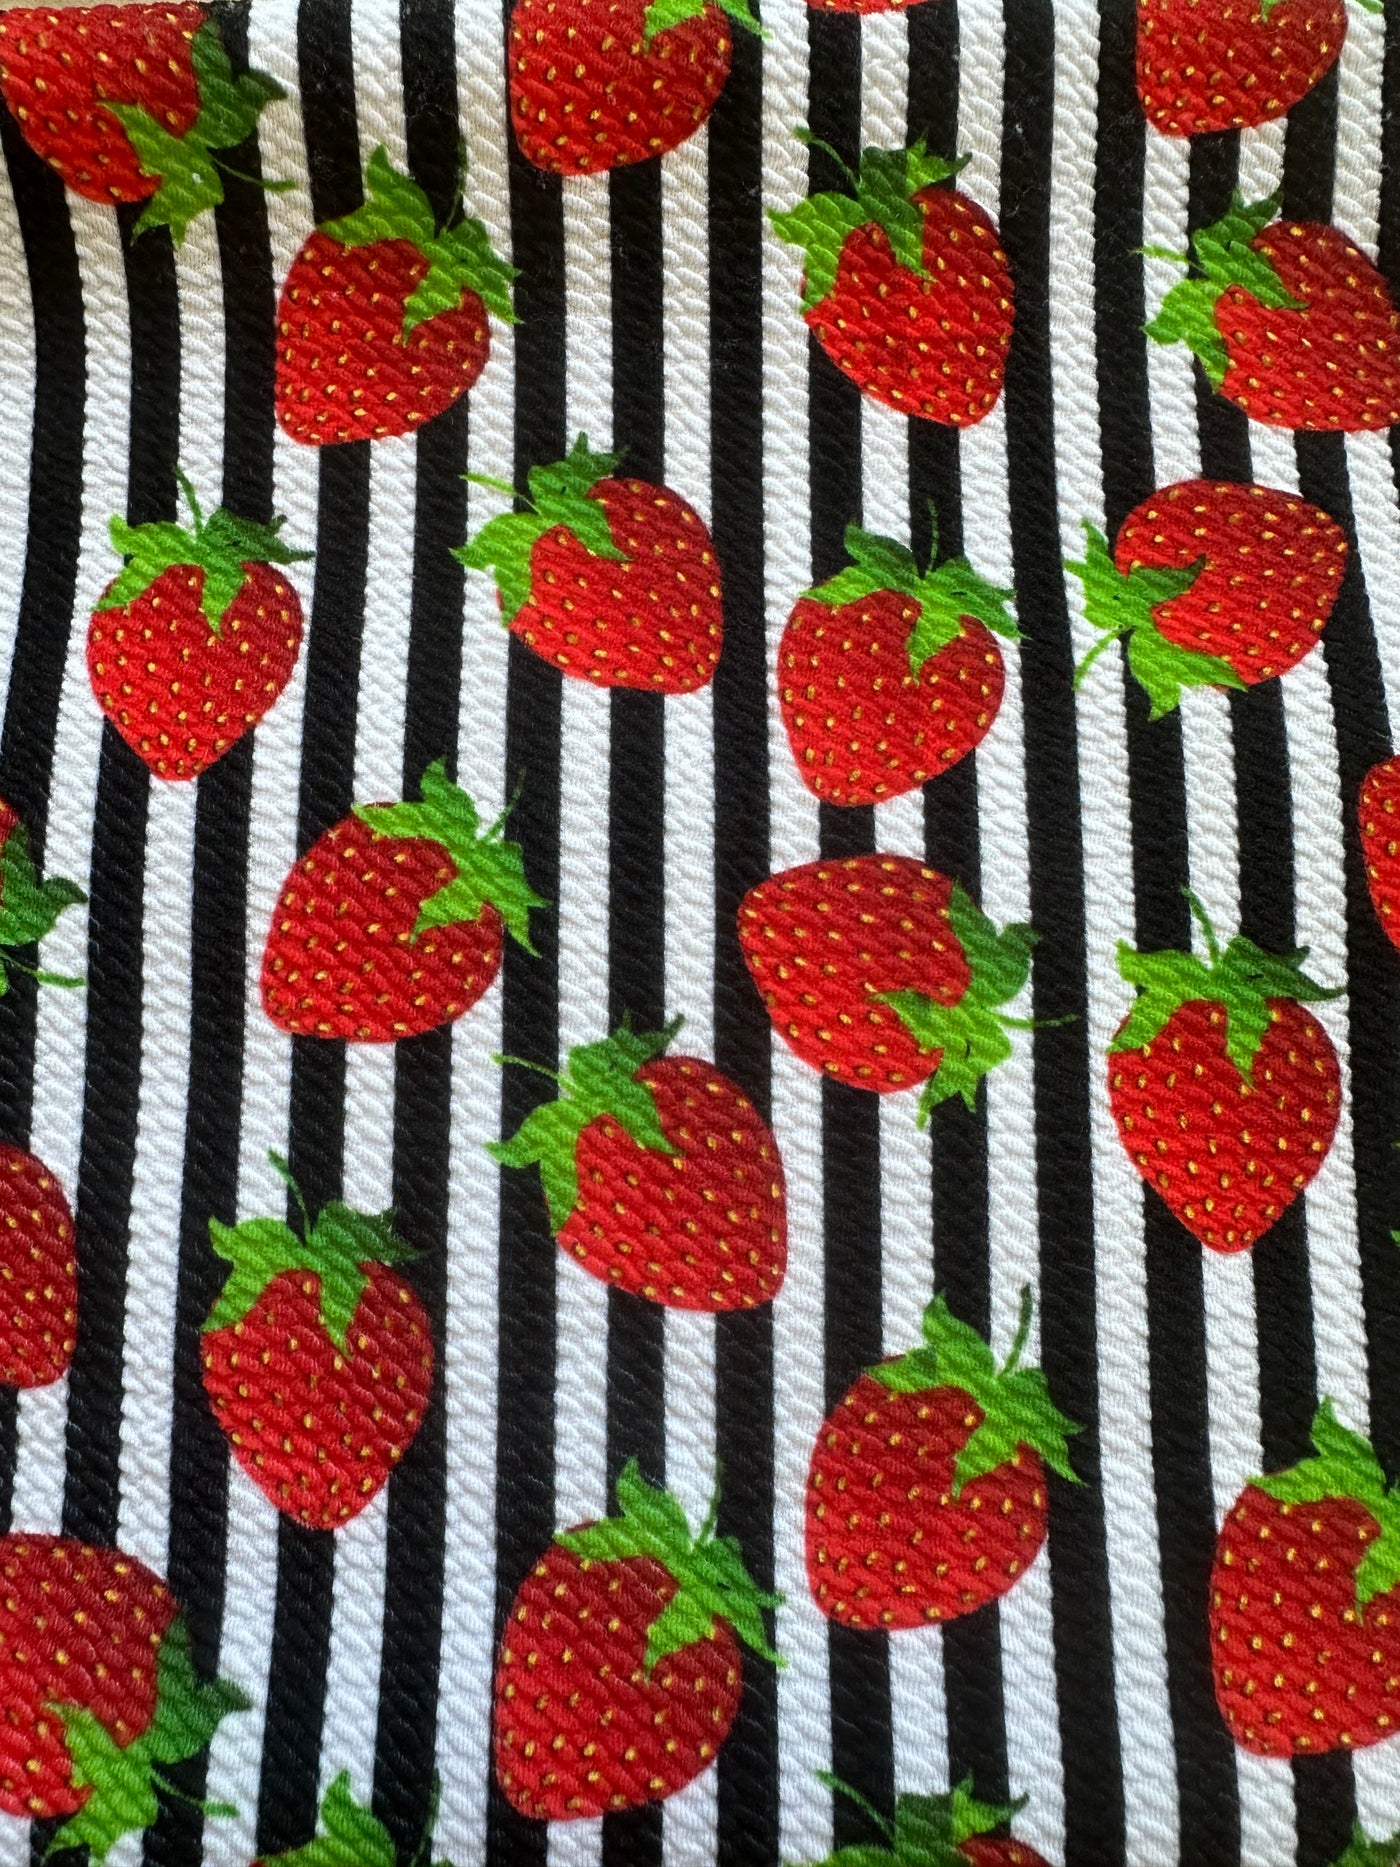 Striped Strawberries